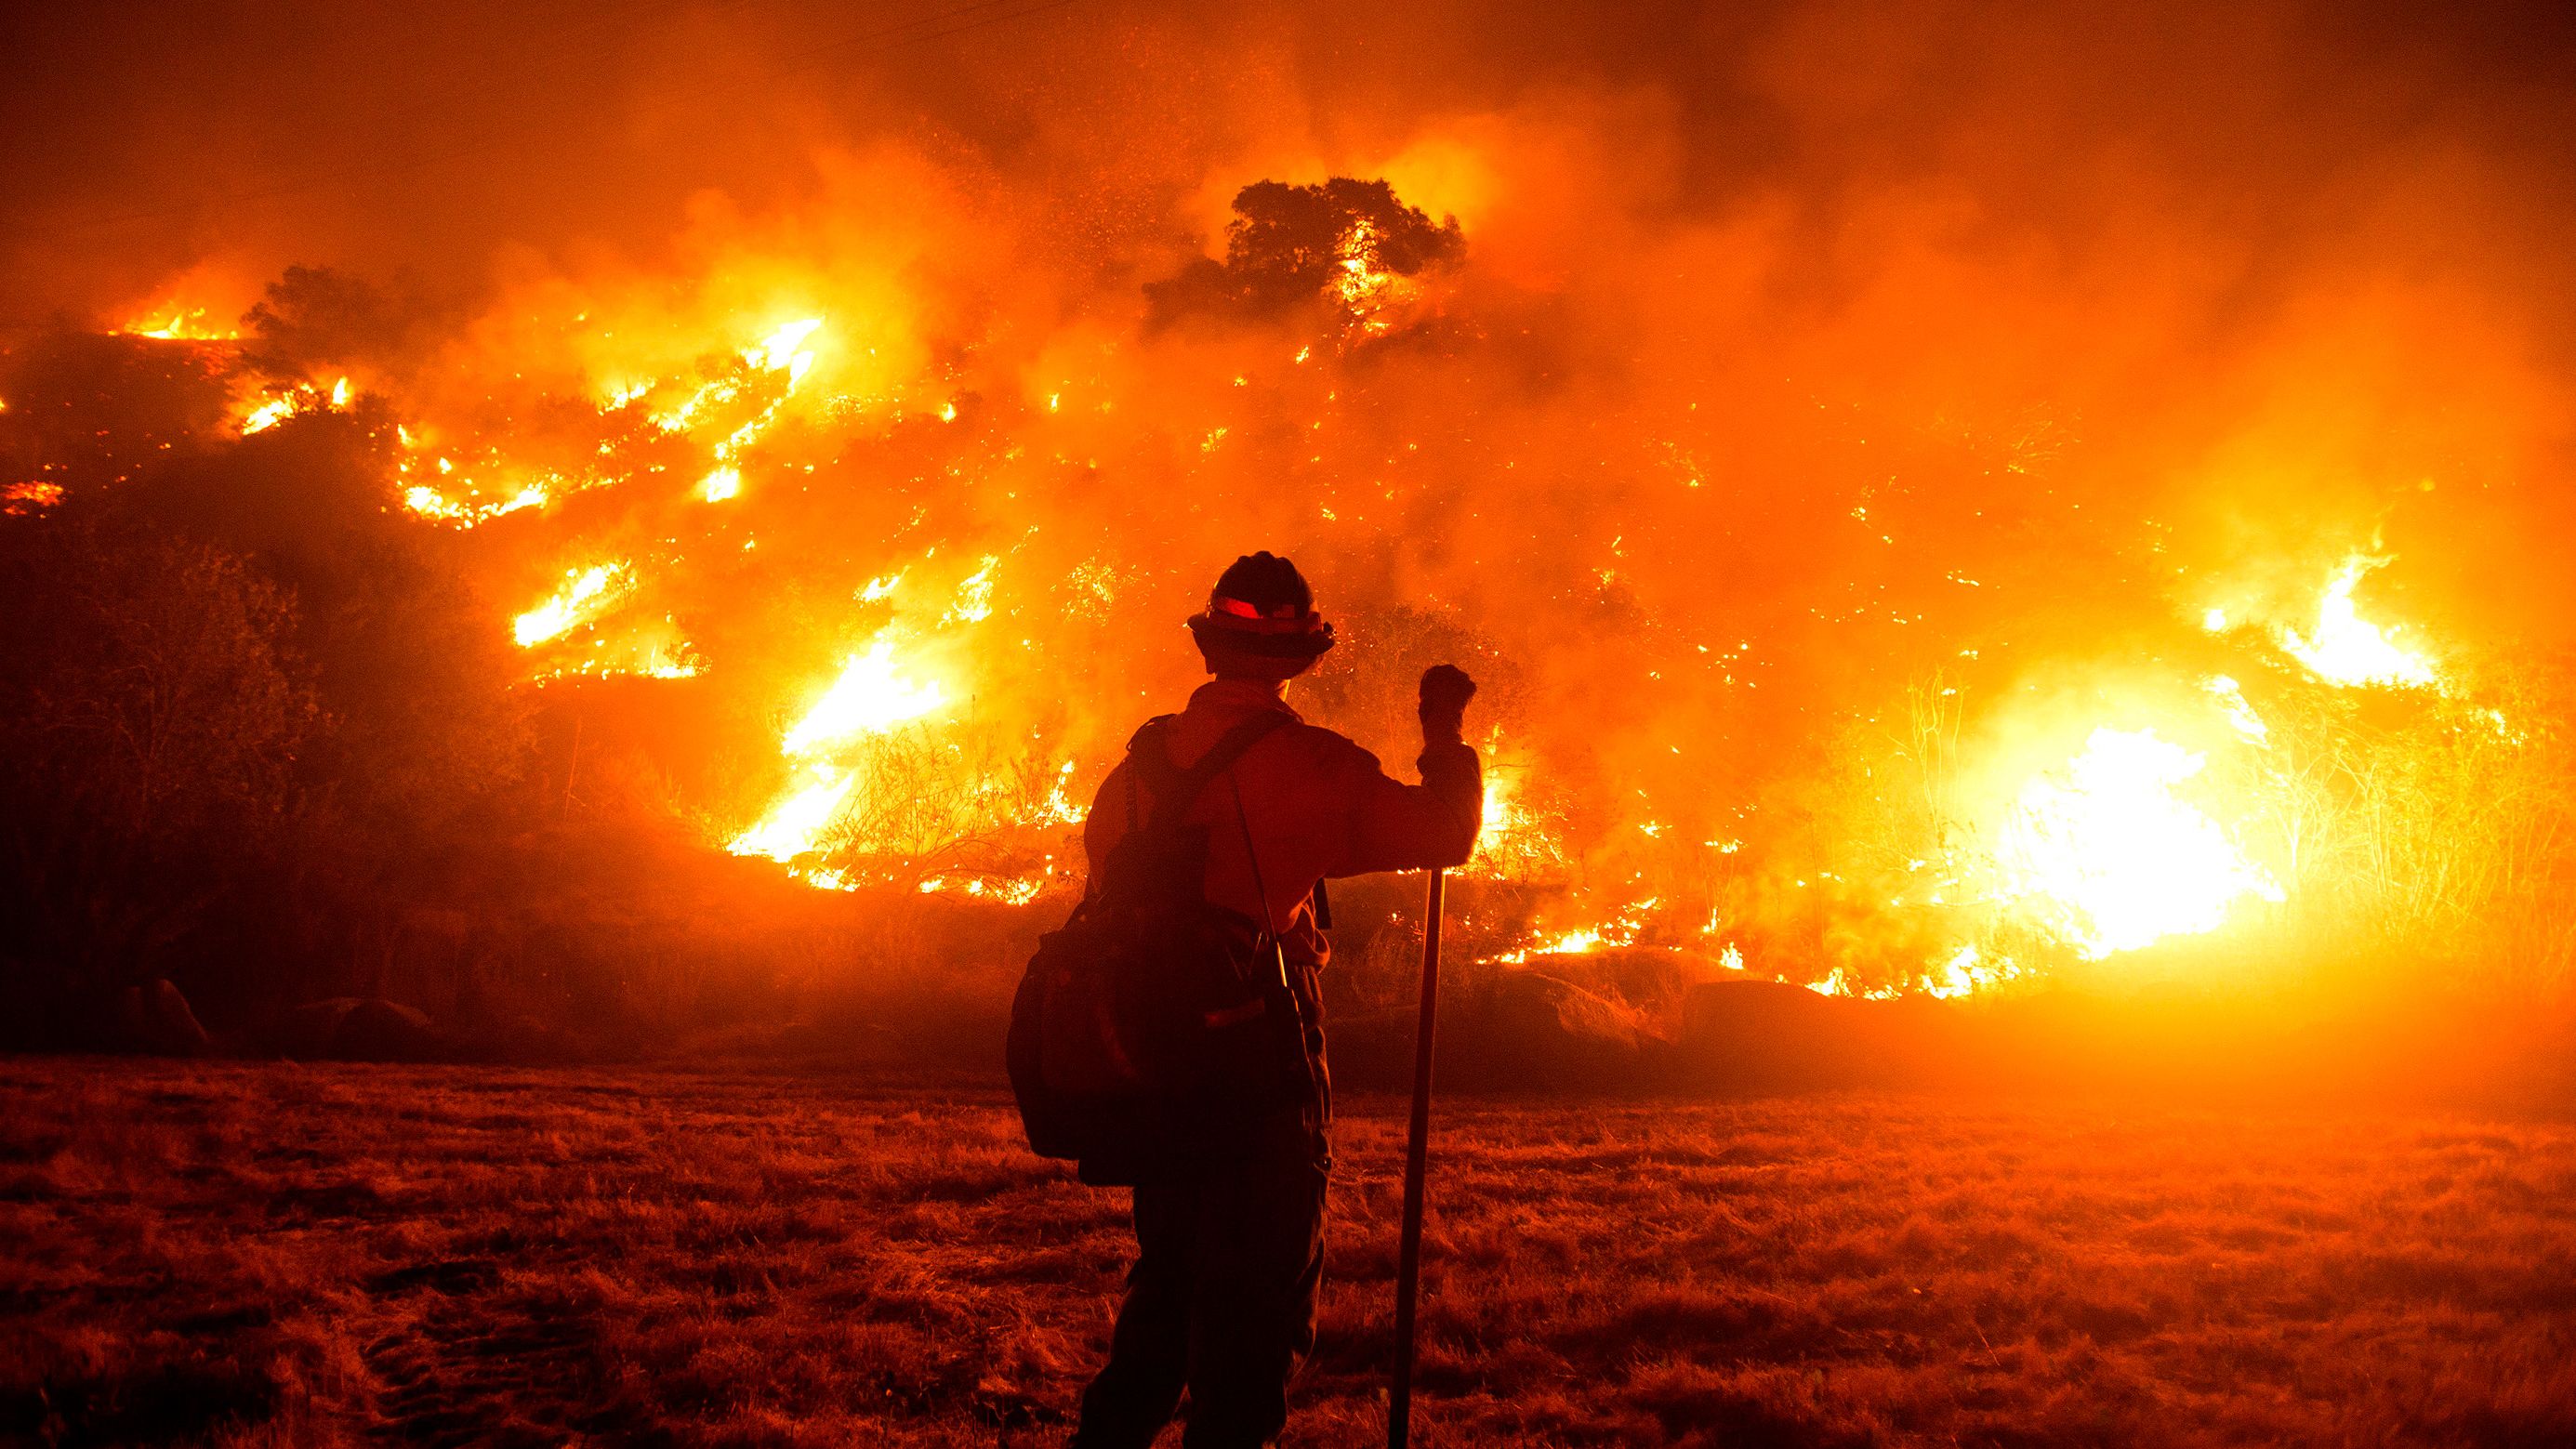 A firefighter works at the scene of the Bobcat Fire burning on hillsides near Monrovia, California, on September 15, 2020.